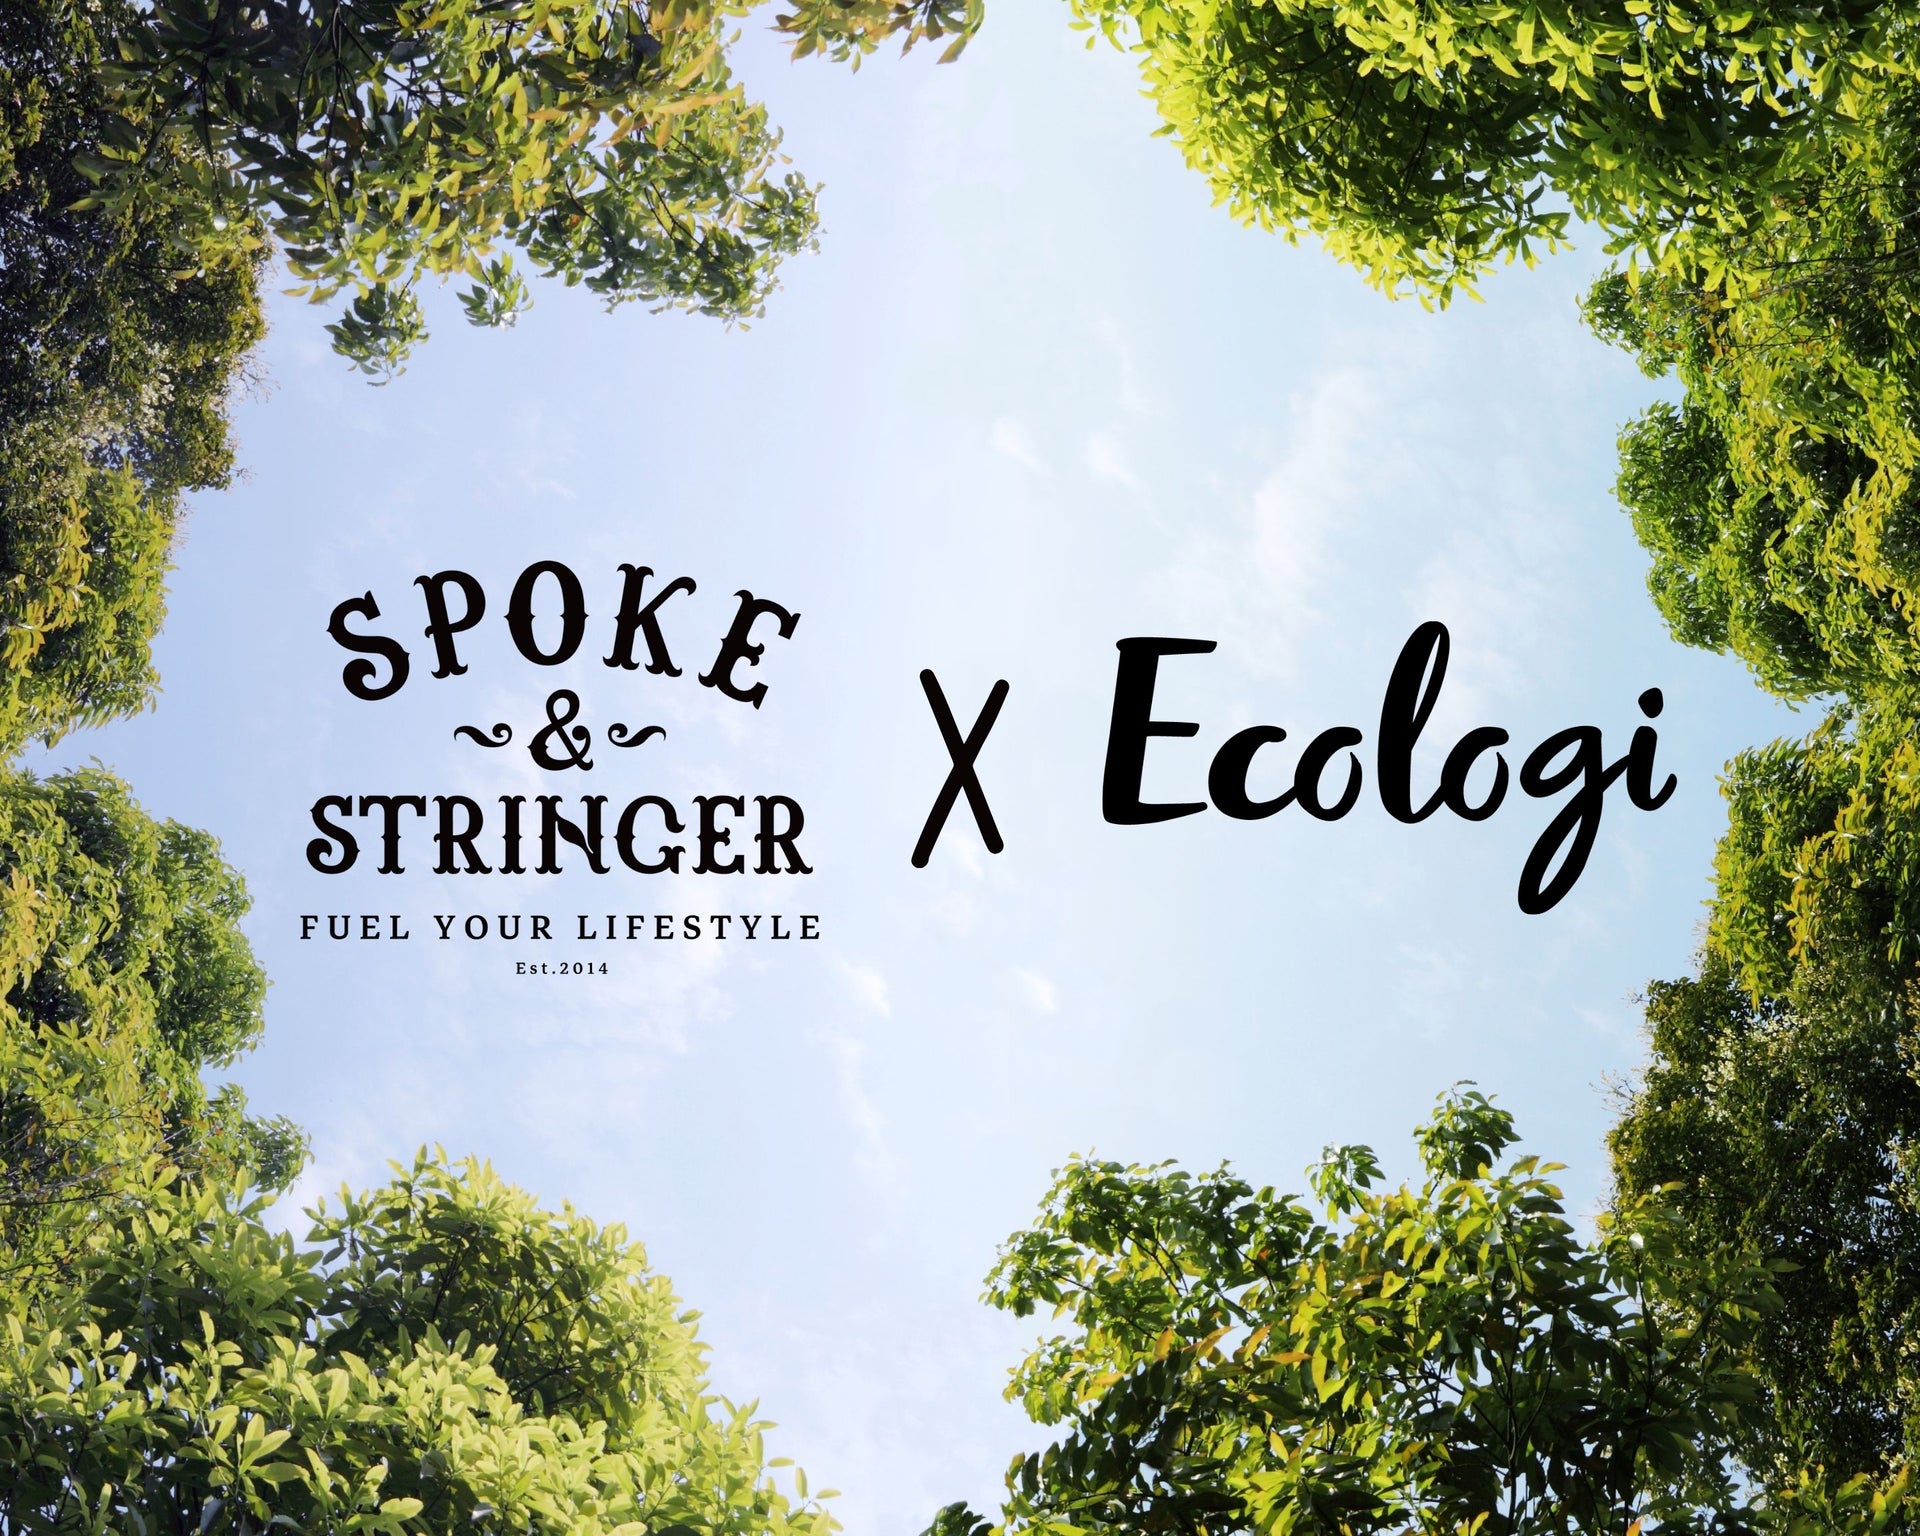 Spoke & Stringer X Ecologi